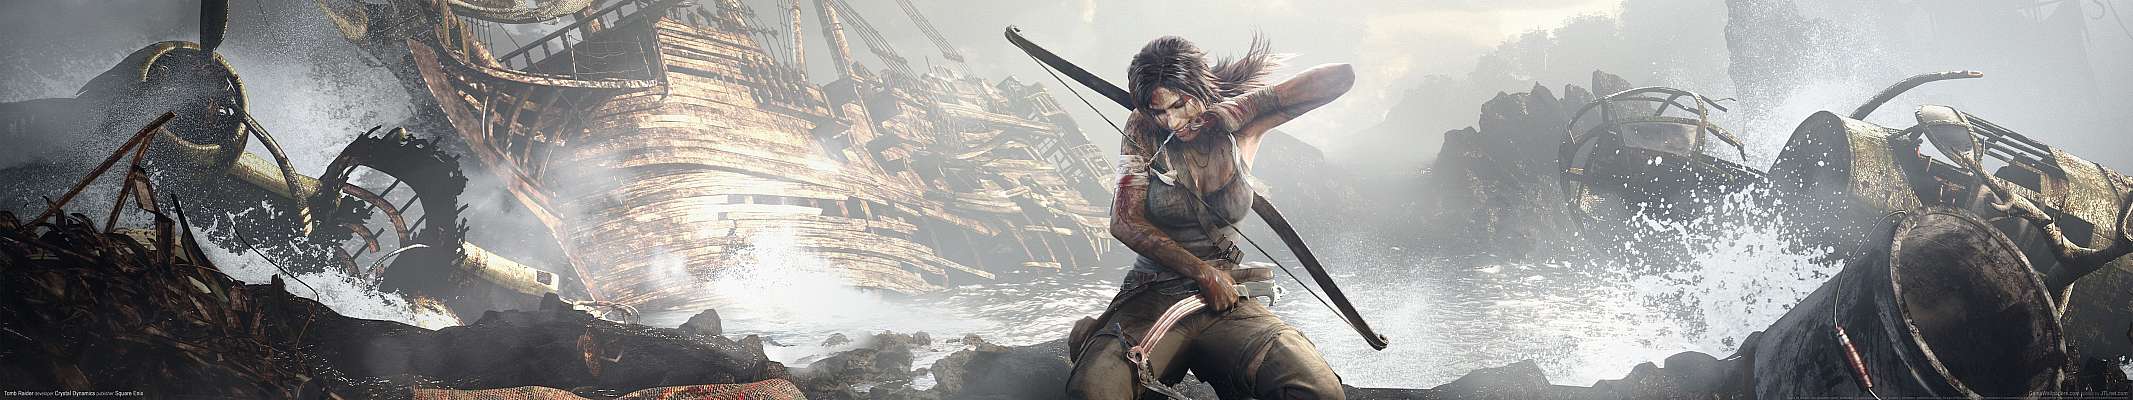 Tomb Raider triple screen fond d'cran